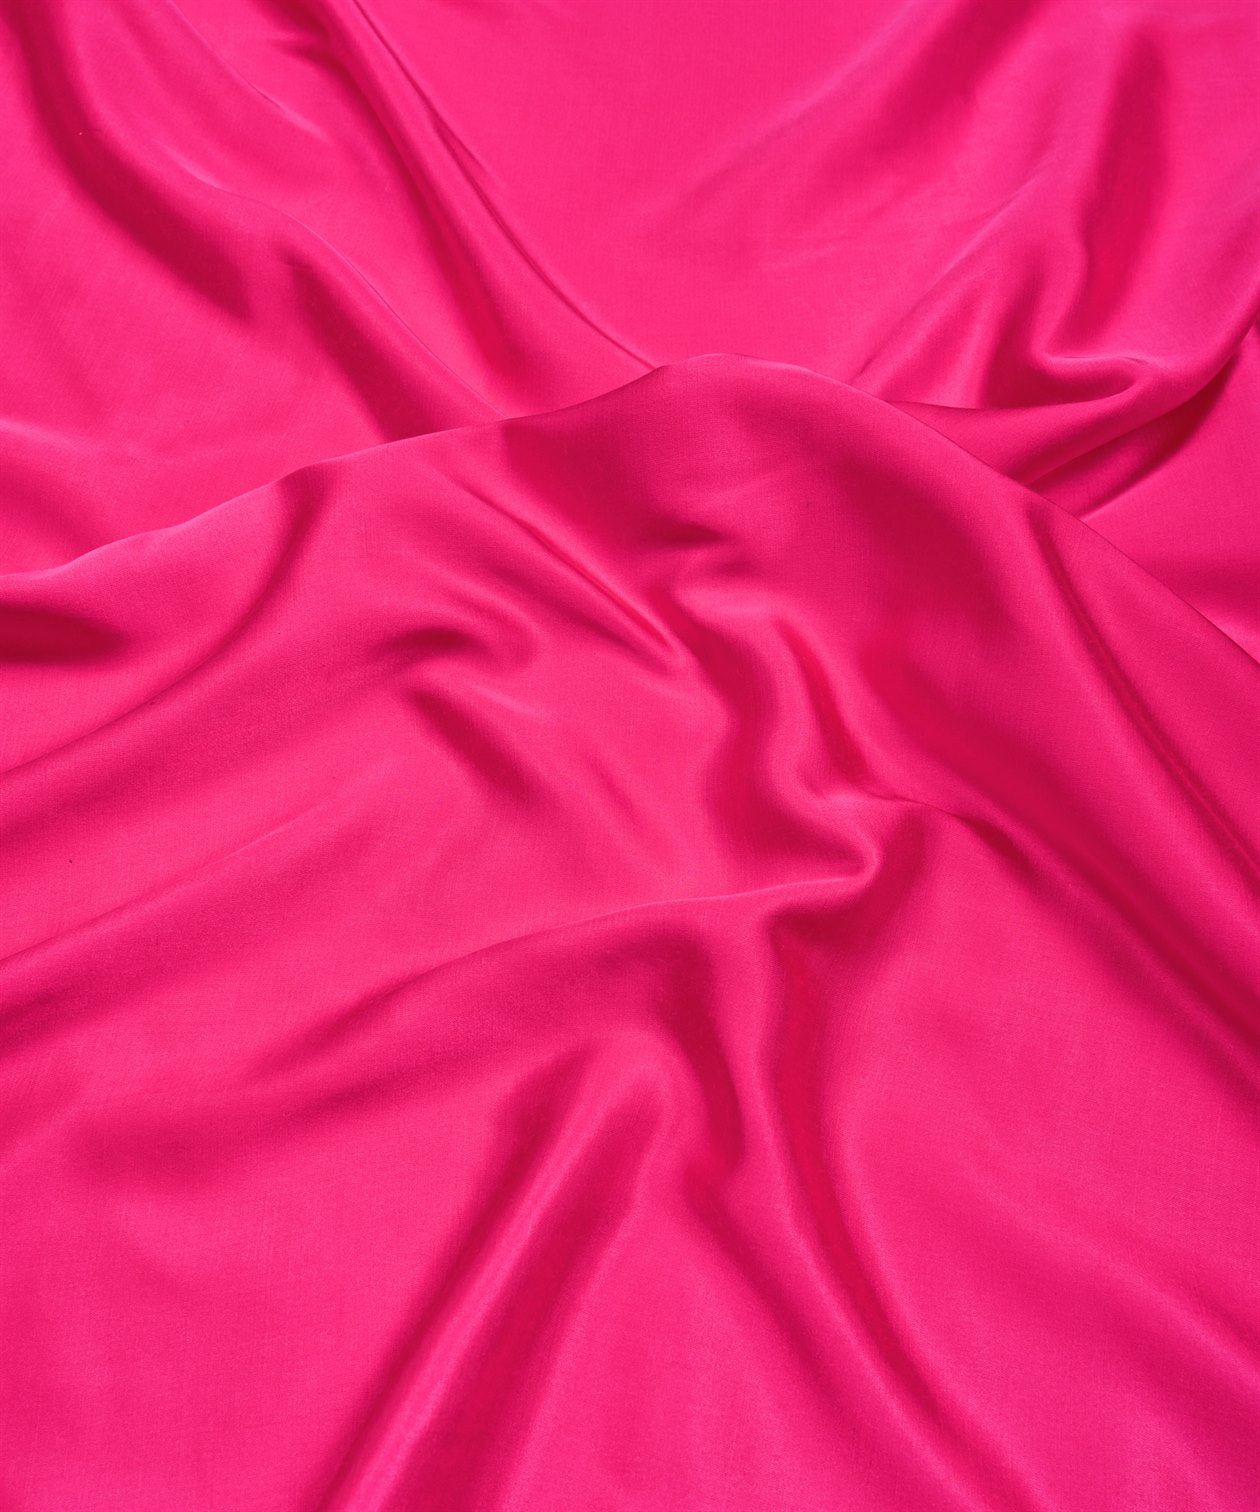 Hot Pink Plain Dyed Modal Satin Fabric